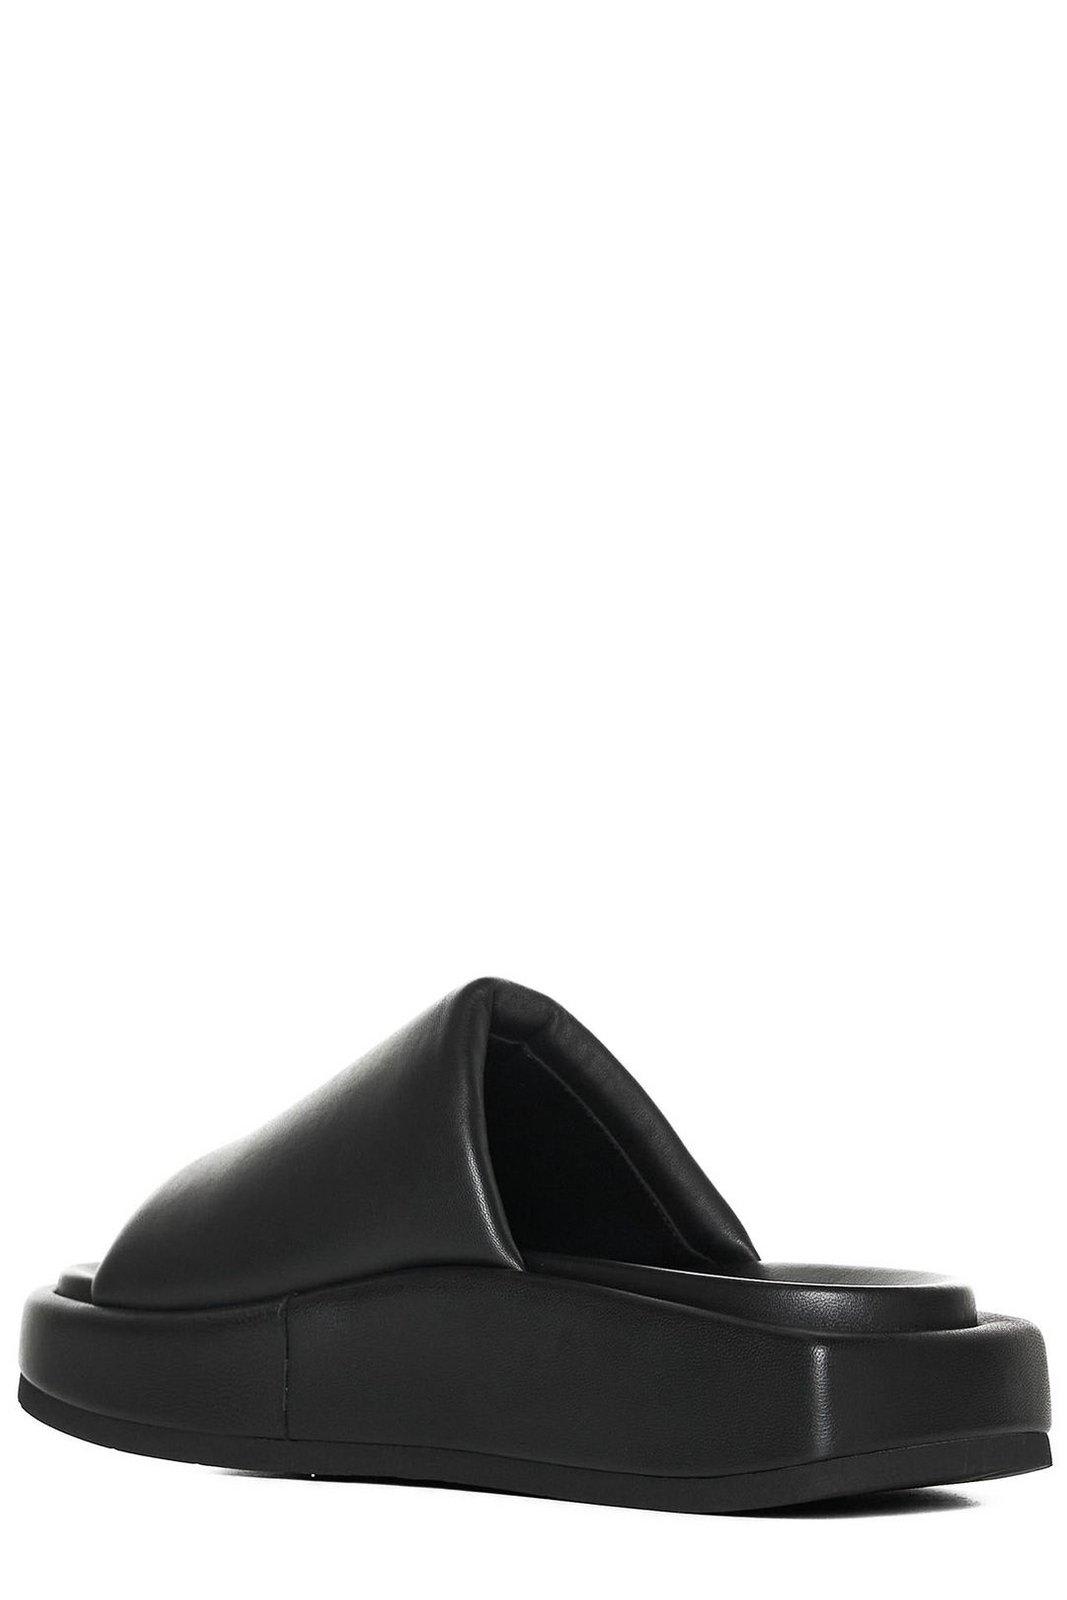 Shop Attico Mia Flatform Sandals In Black